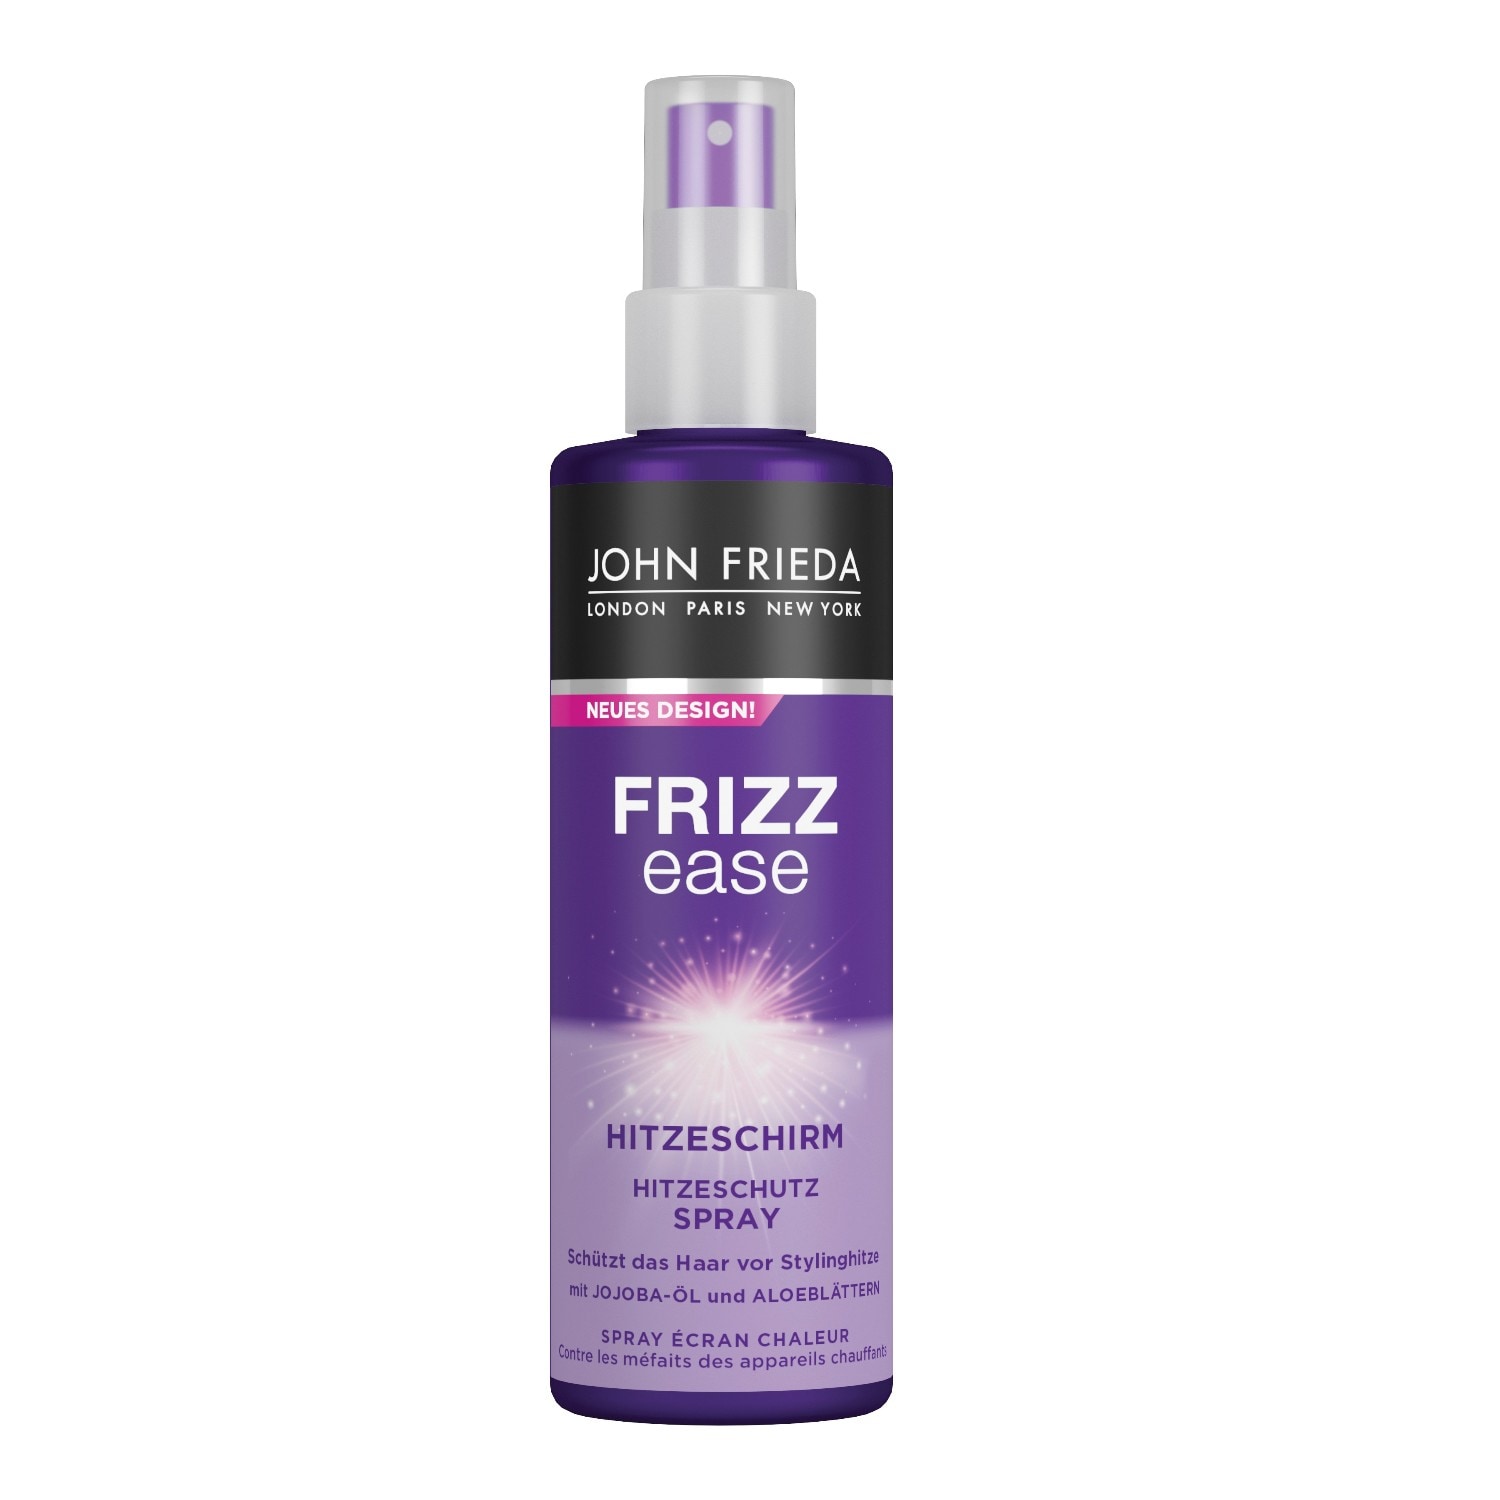 Frizz Ease® Heat screen heat protection spray